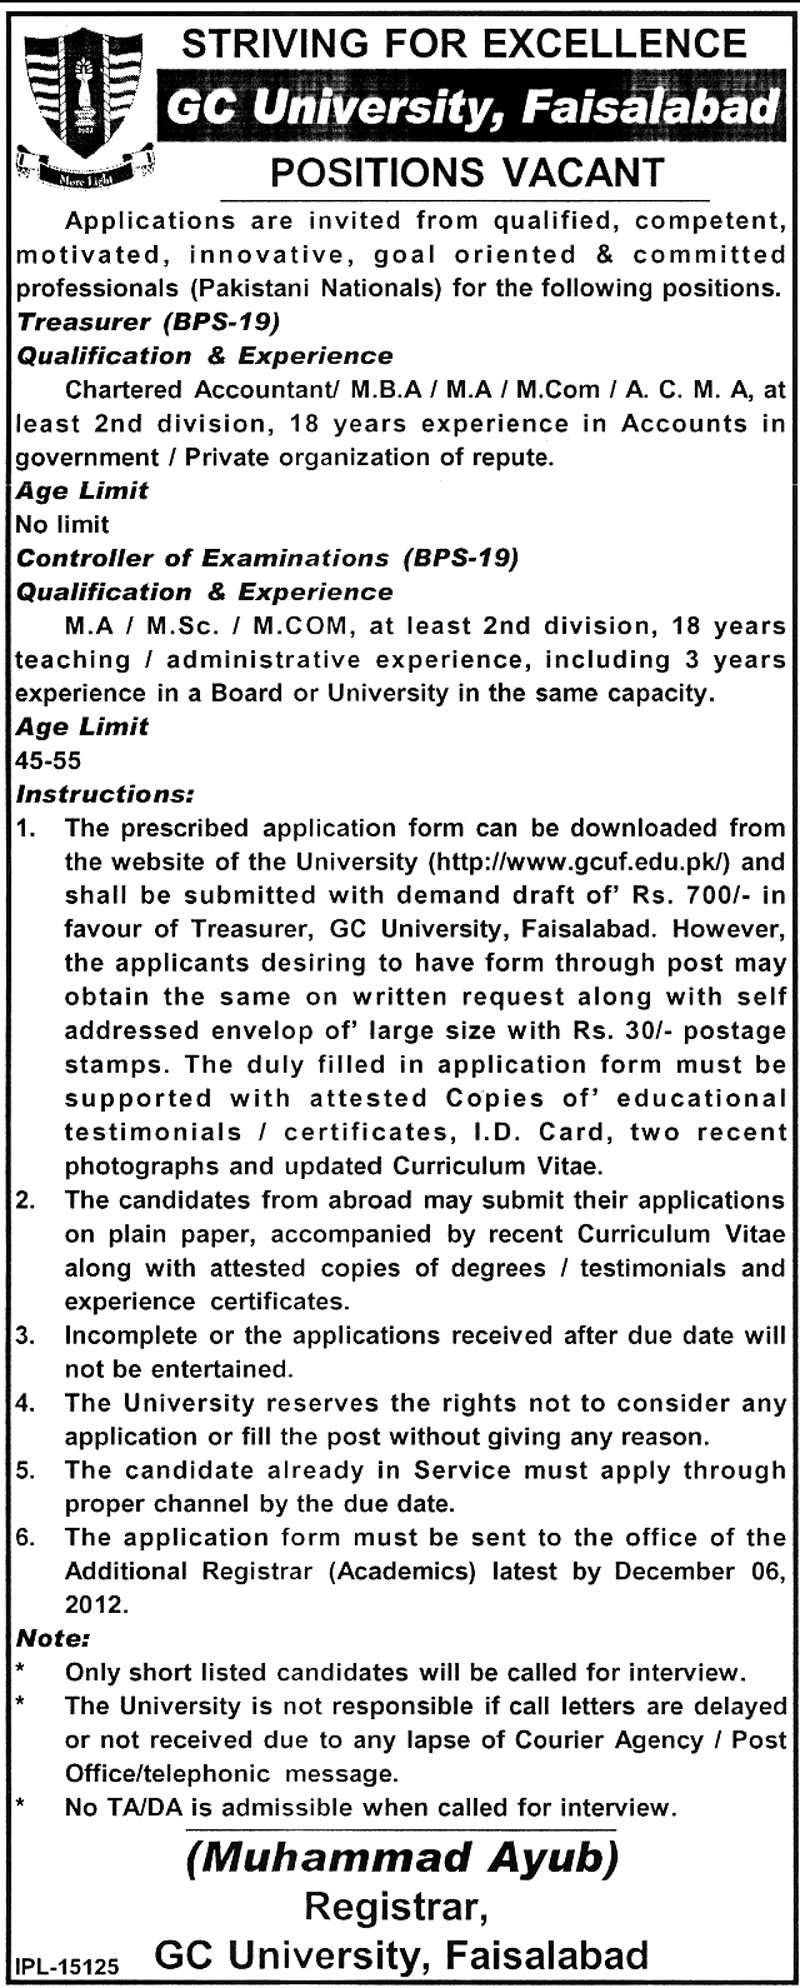 GC University Faisalabad Requires Treasurer & Controller of Examinations